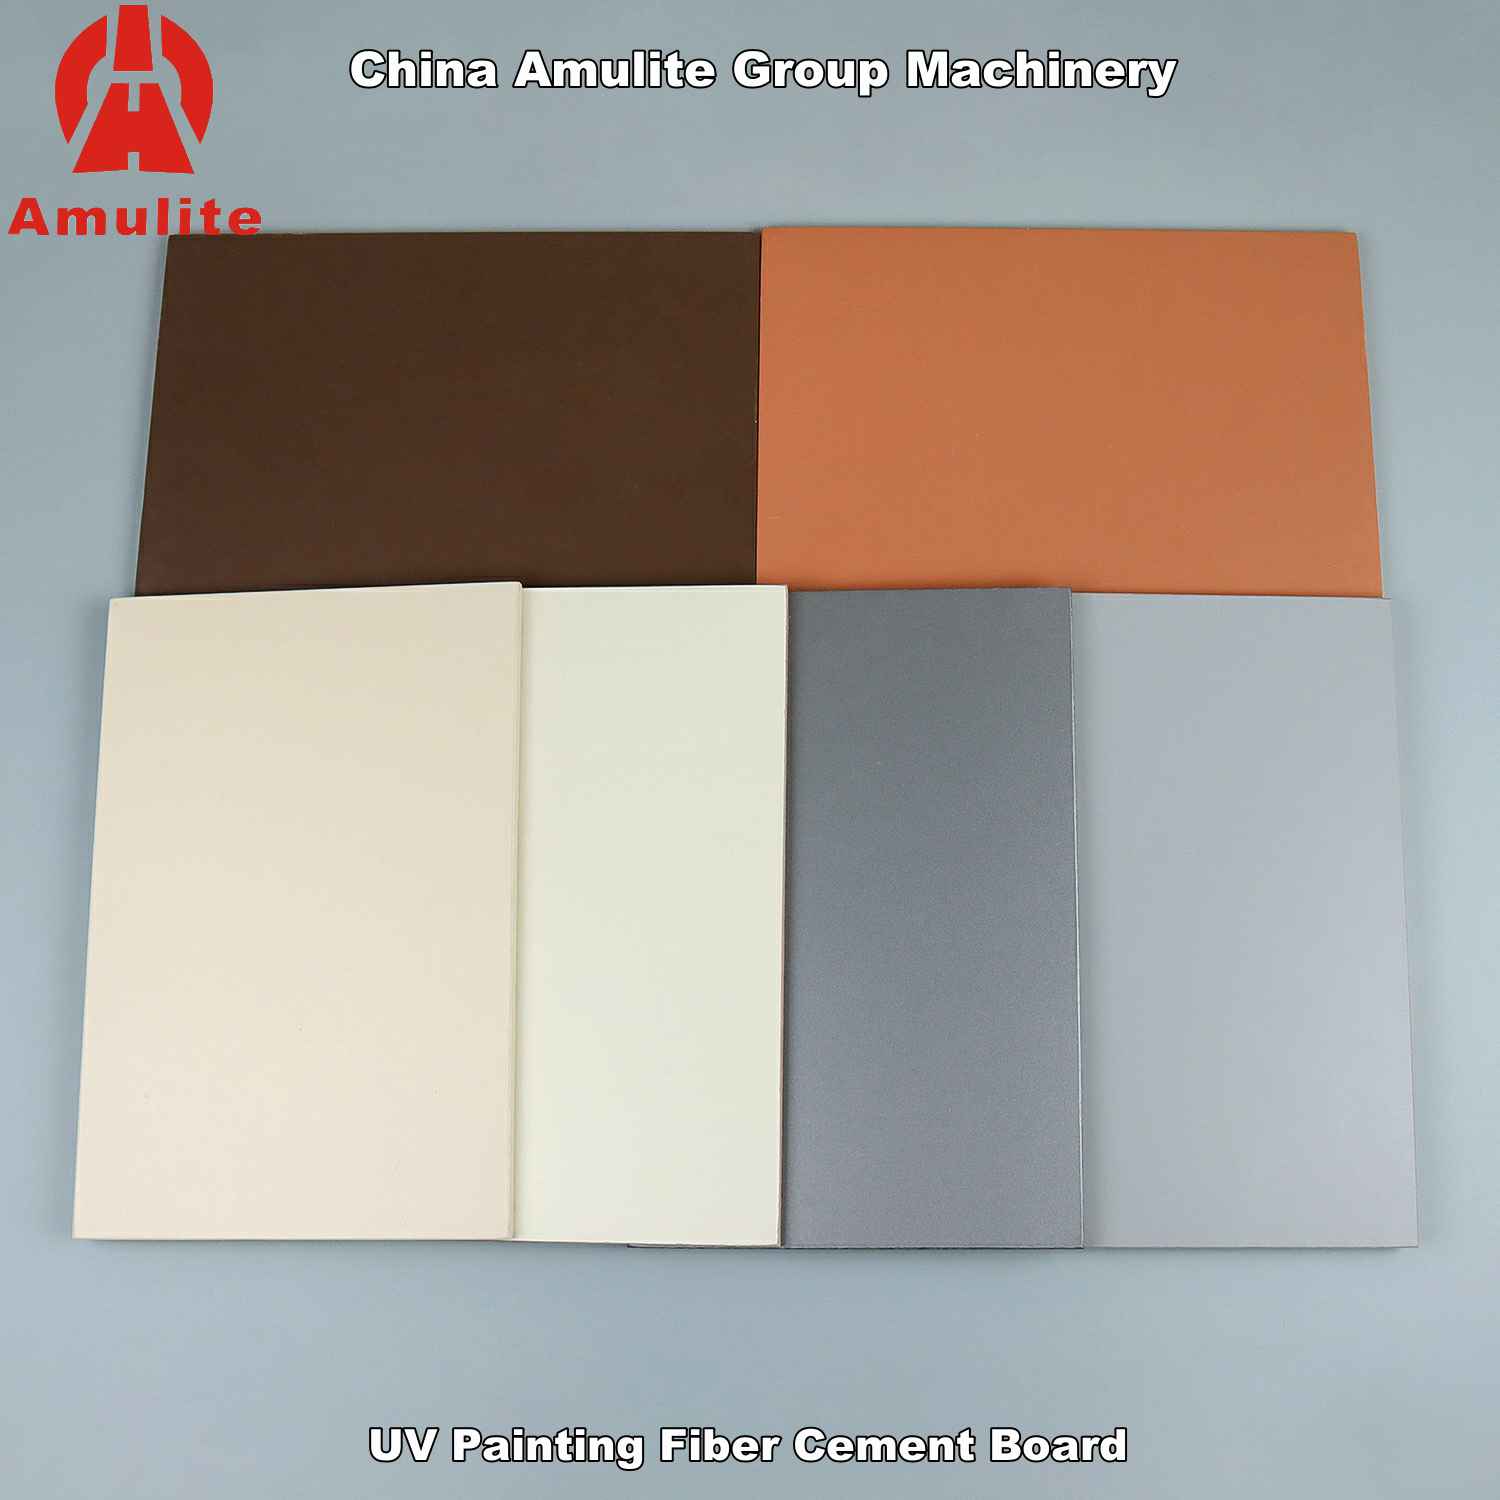 Amulite-UV Painting Fiber Cement Board Series